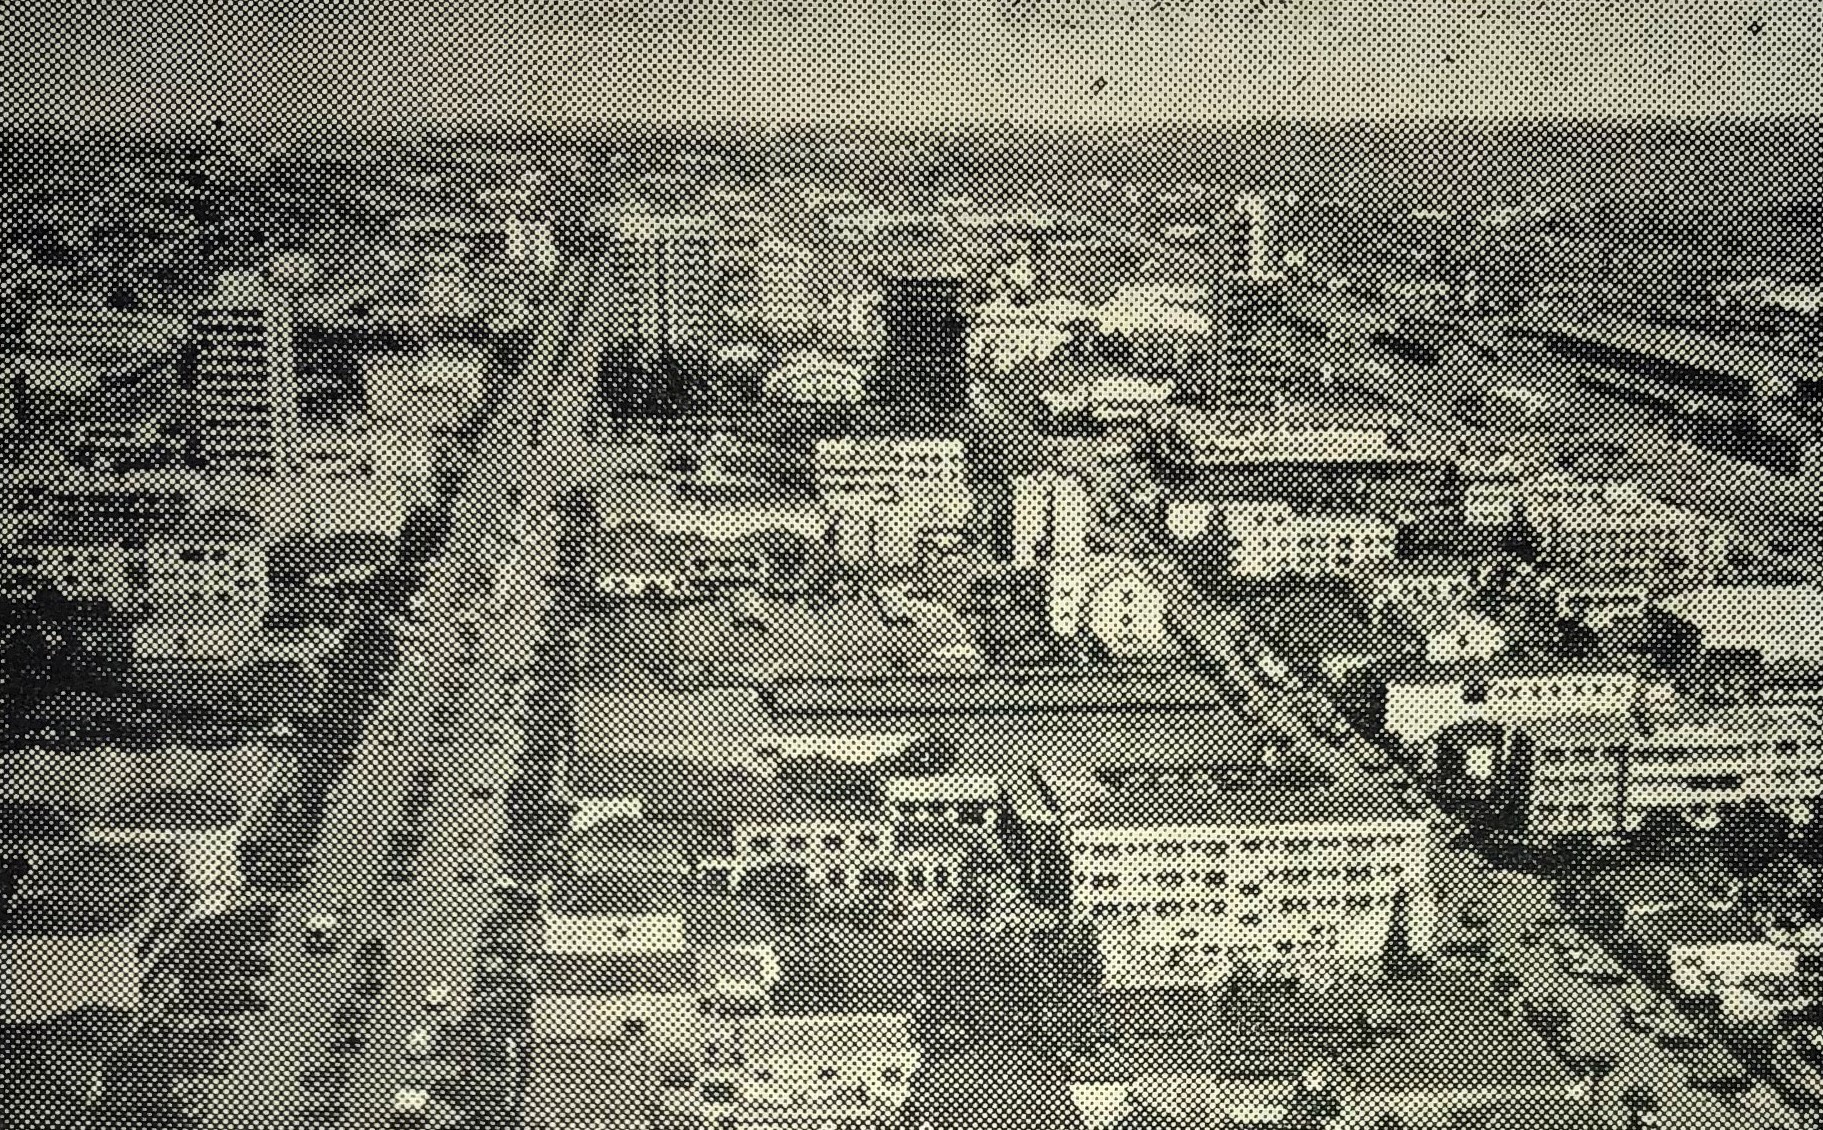 Centro de Maringá - 1967